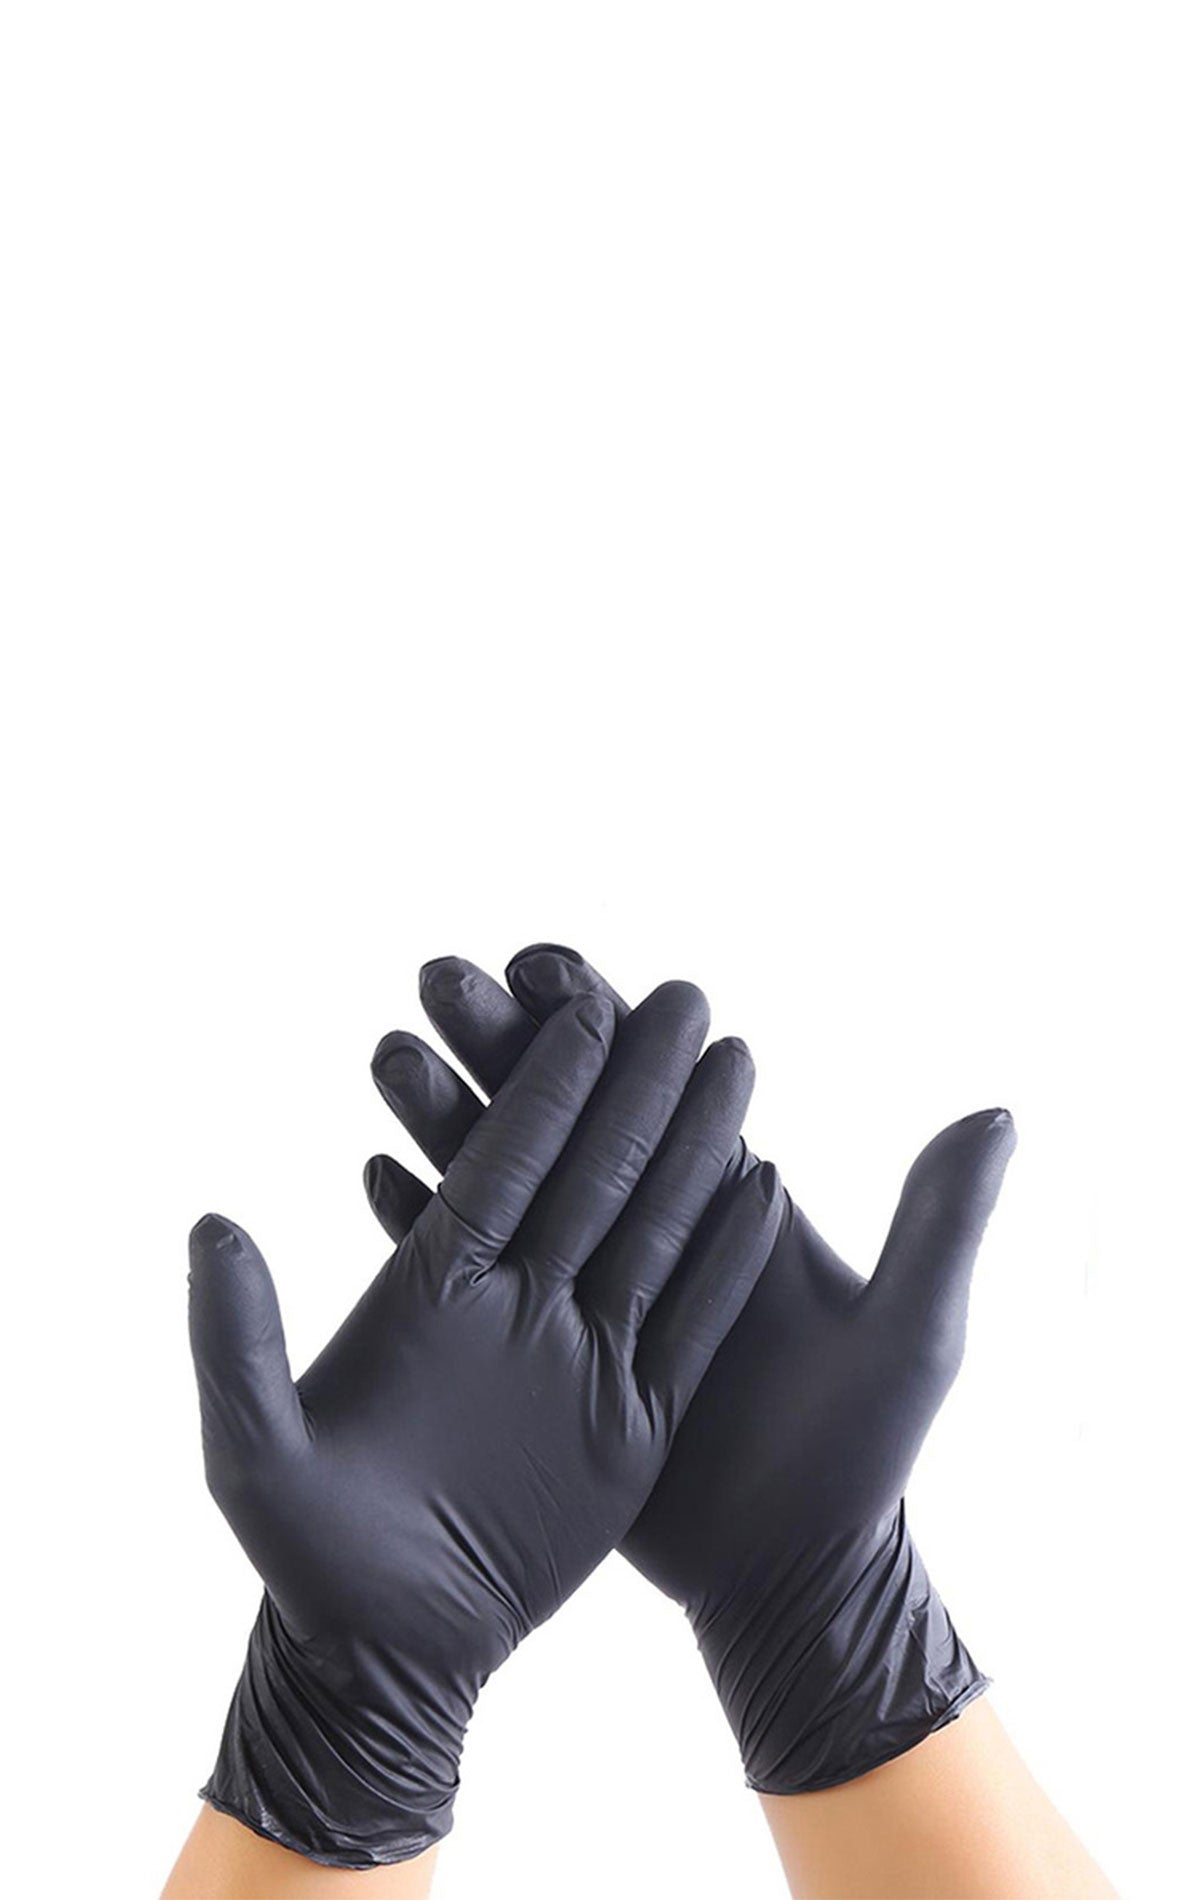 Black Nitrile Disposable Gloves Pack of 500